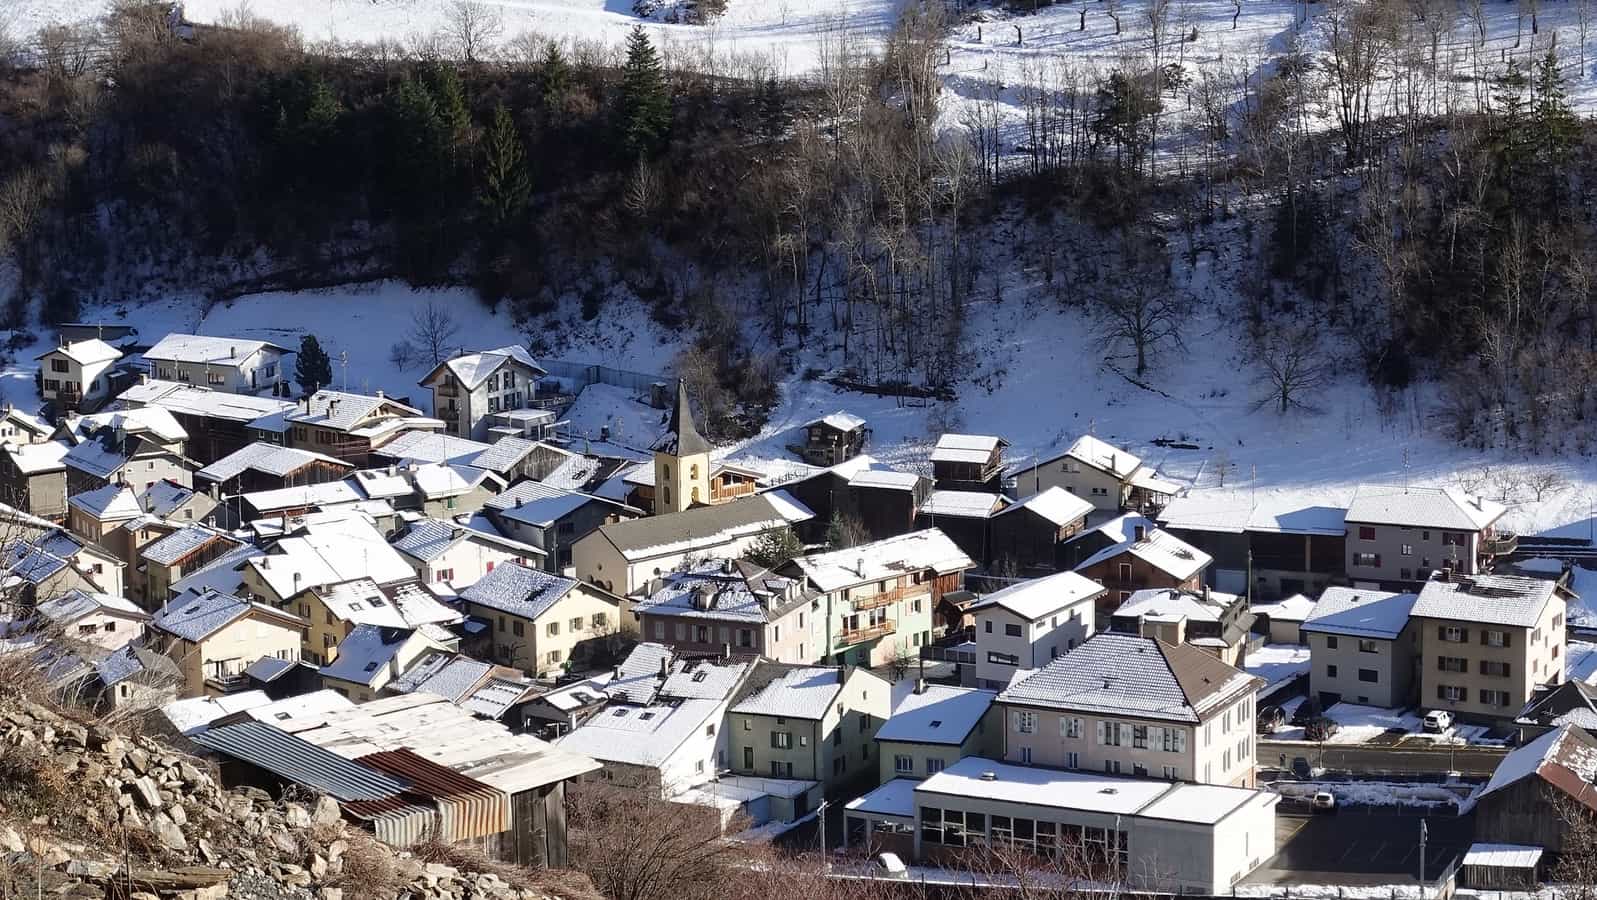 Village of Bovernier in winter